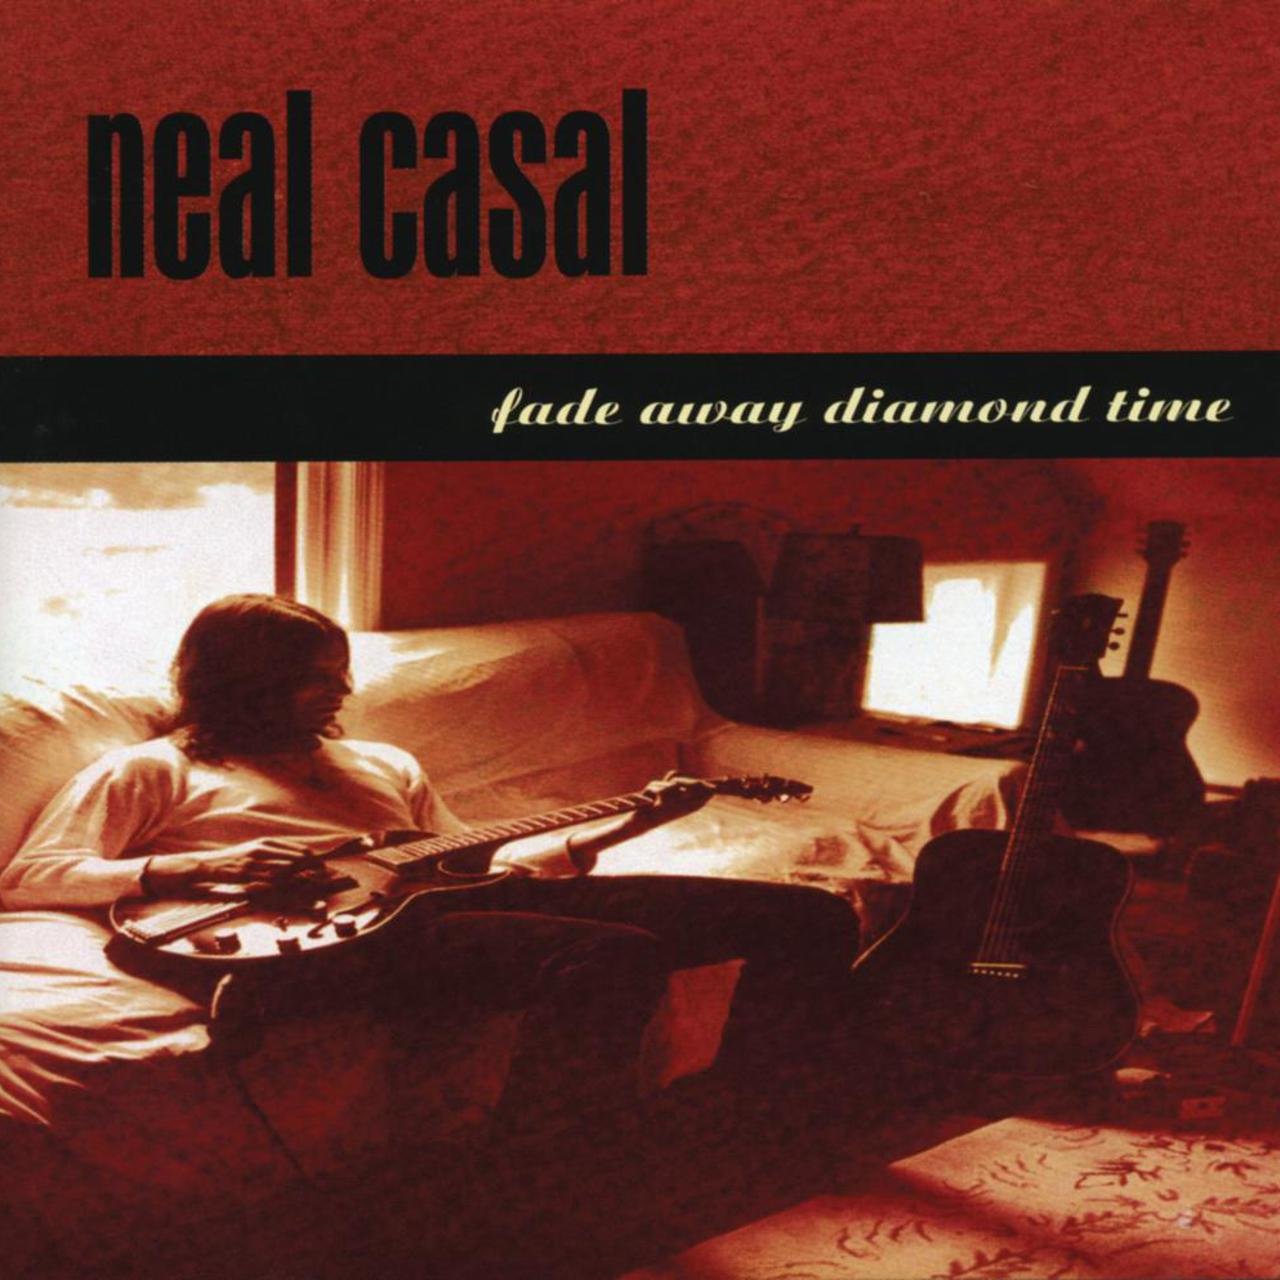 Neal Casal - Fade Away Diamond Time (1995)